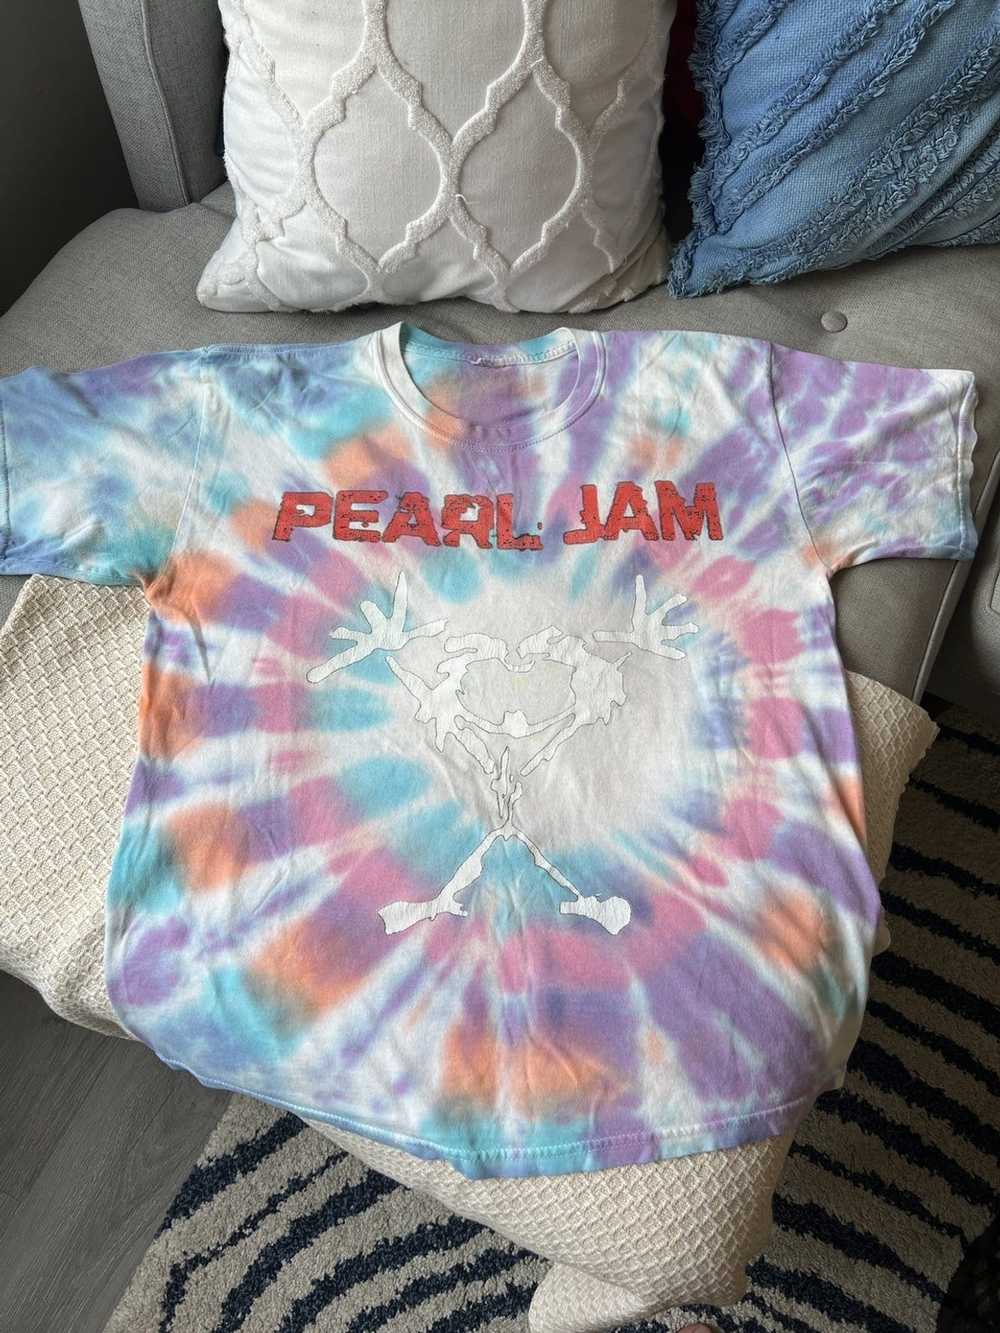 Vintage Vintage bootleg Pearl Jam t-shirt 2006 - image 1